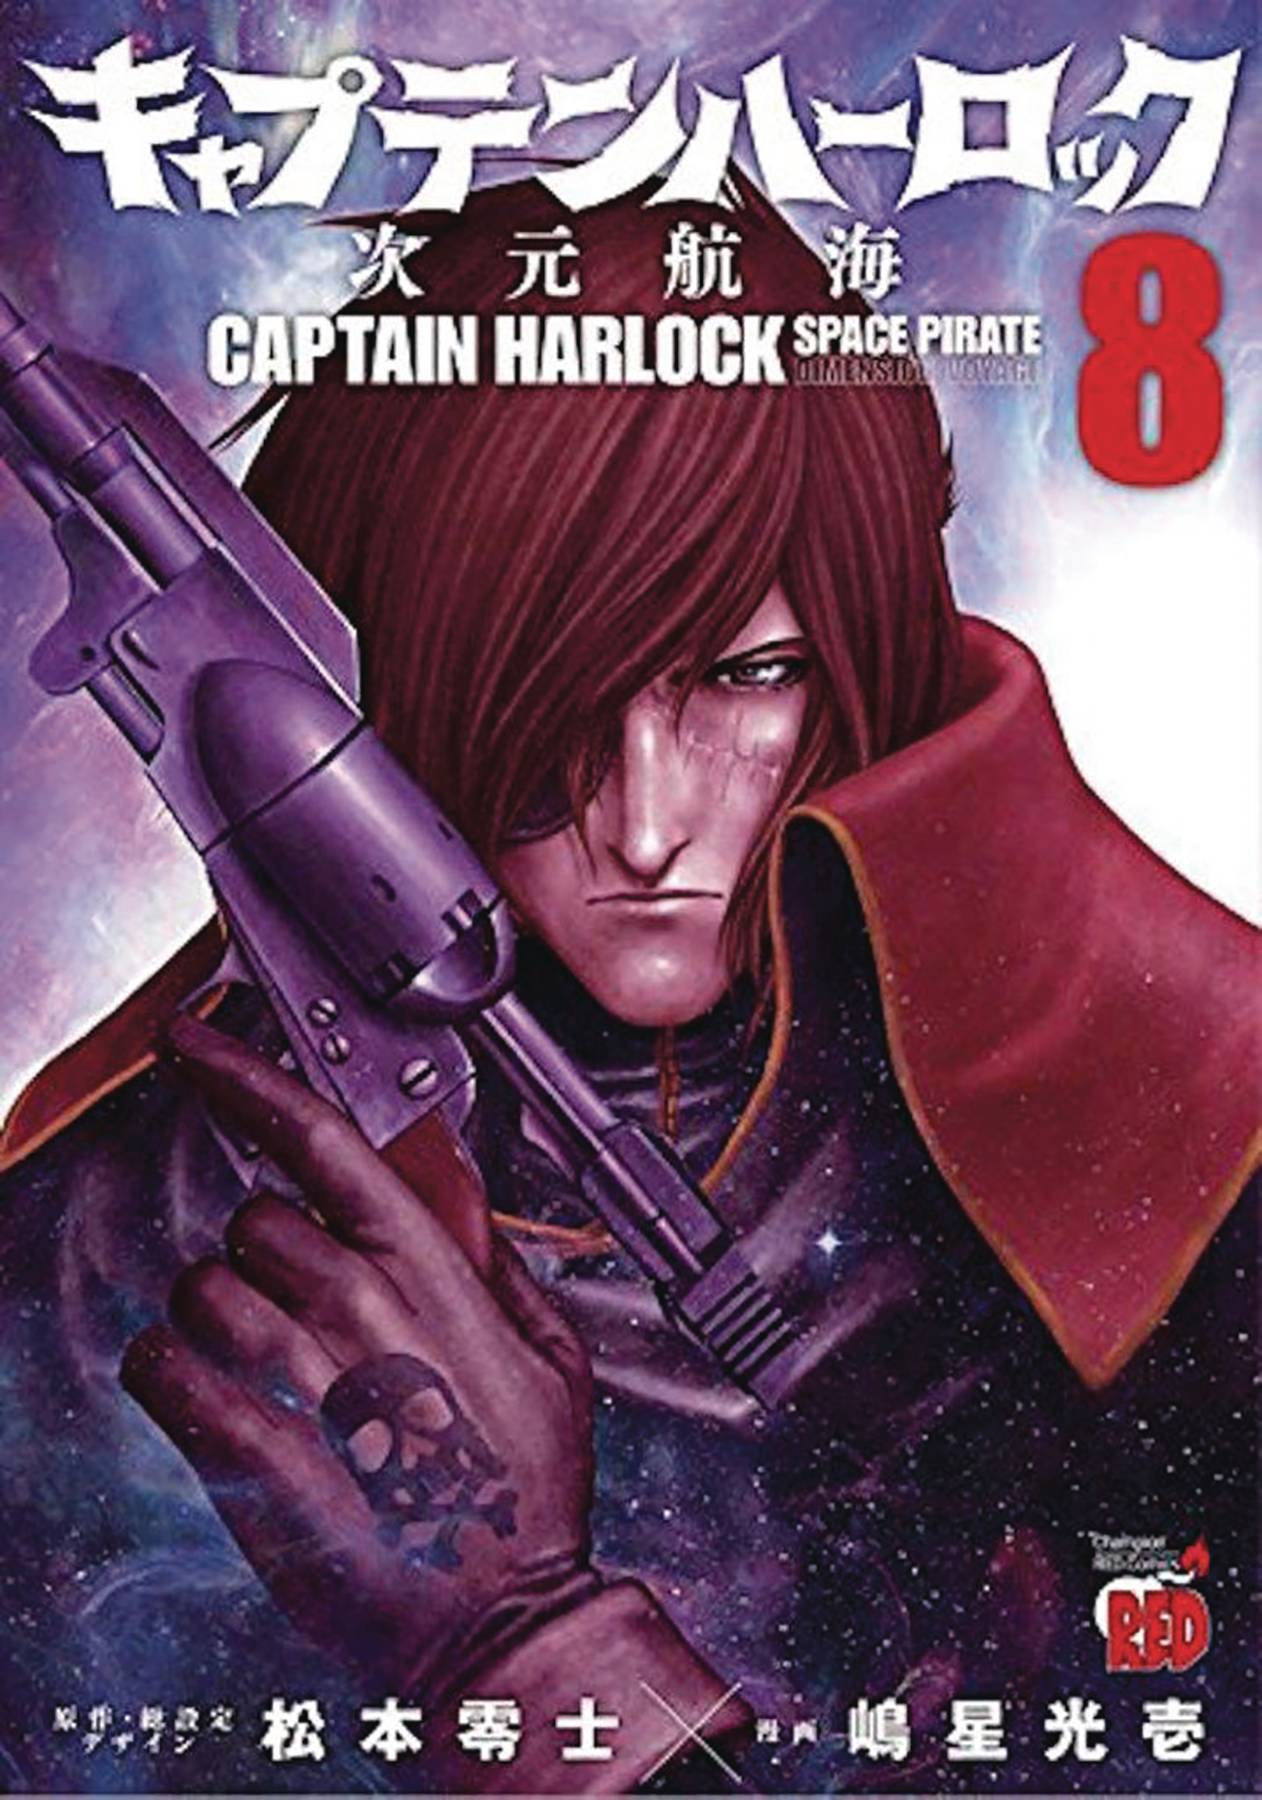 Captain Harlock Dimensional Voyage Manga Volume 8